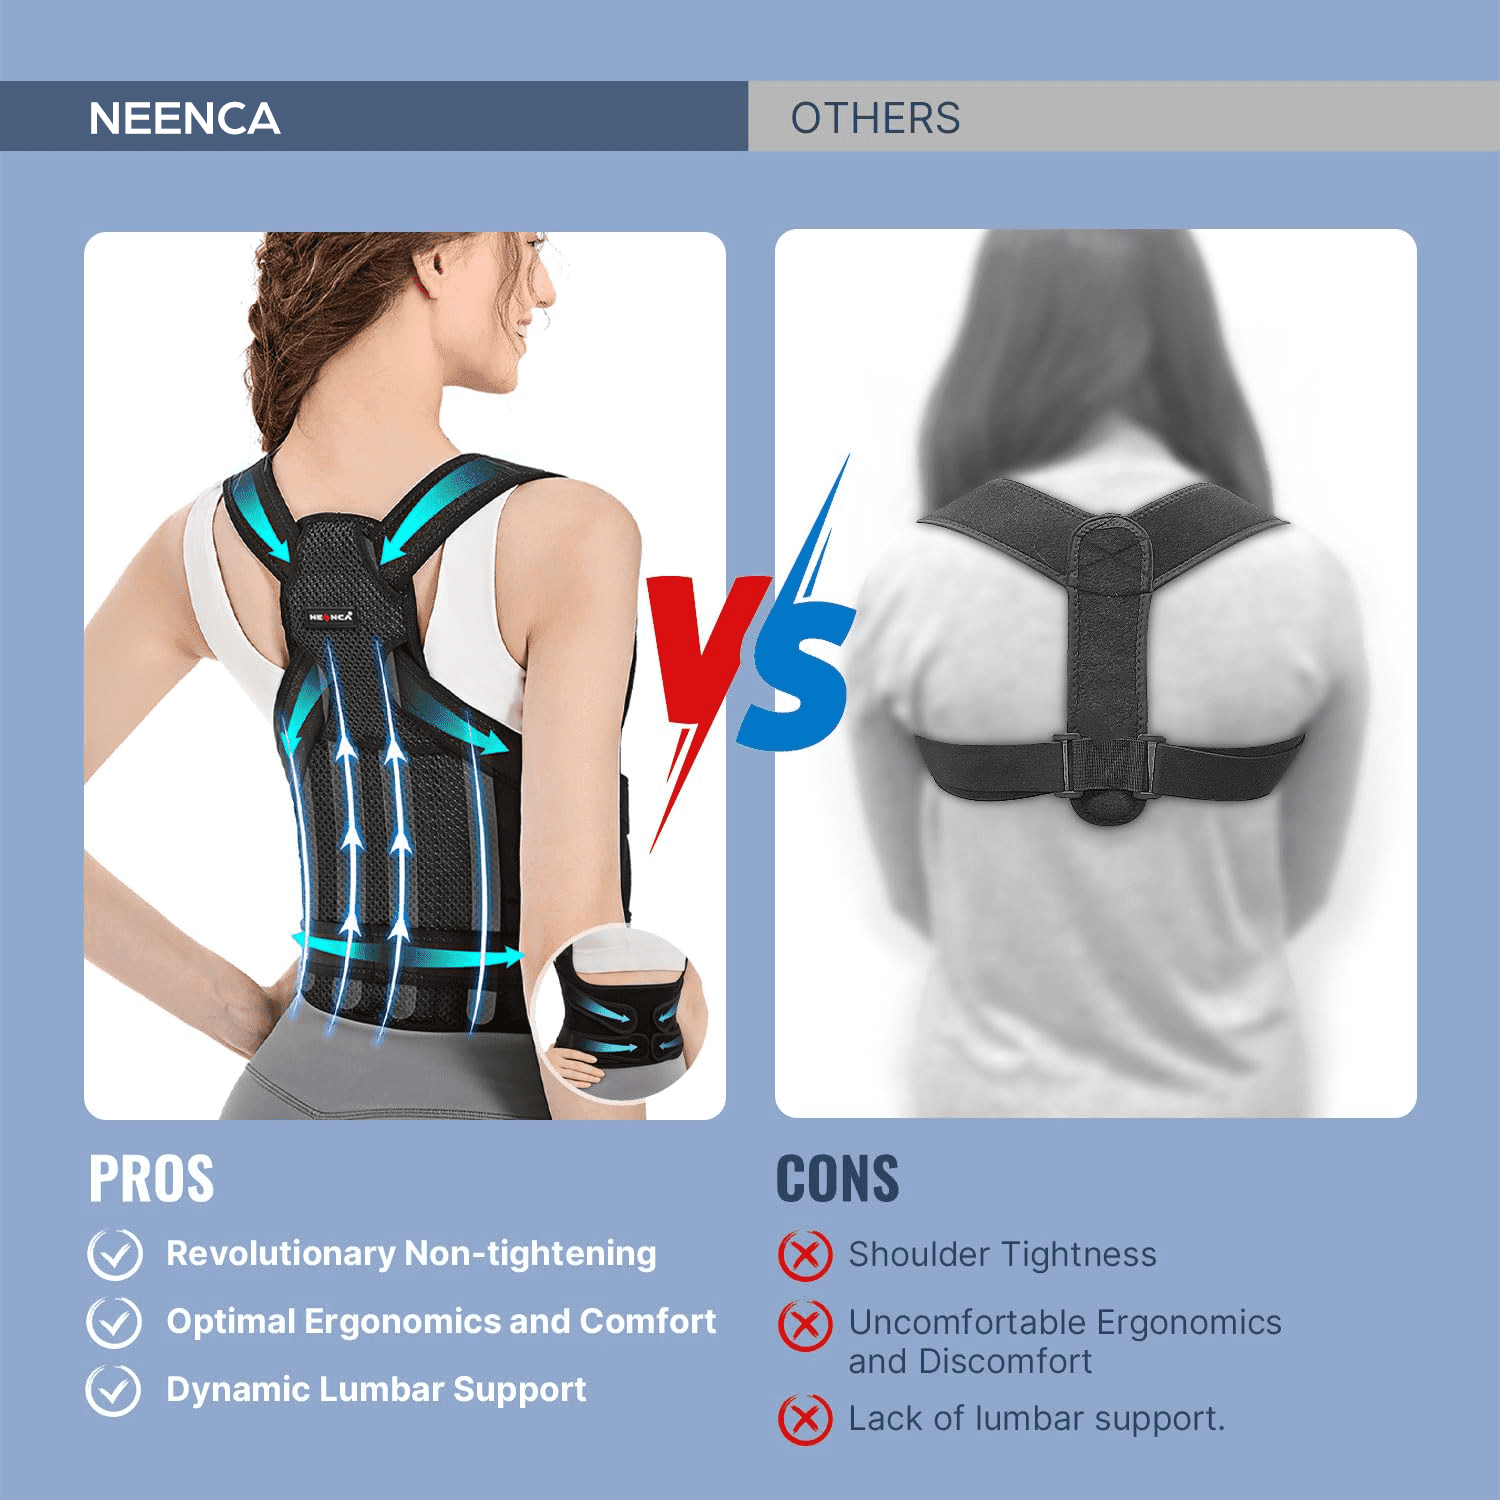 Wellco Large Back Brace Lumbar Support Shoulder Posture Corrector for Women/Men Back Pain Relief, Black